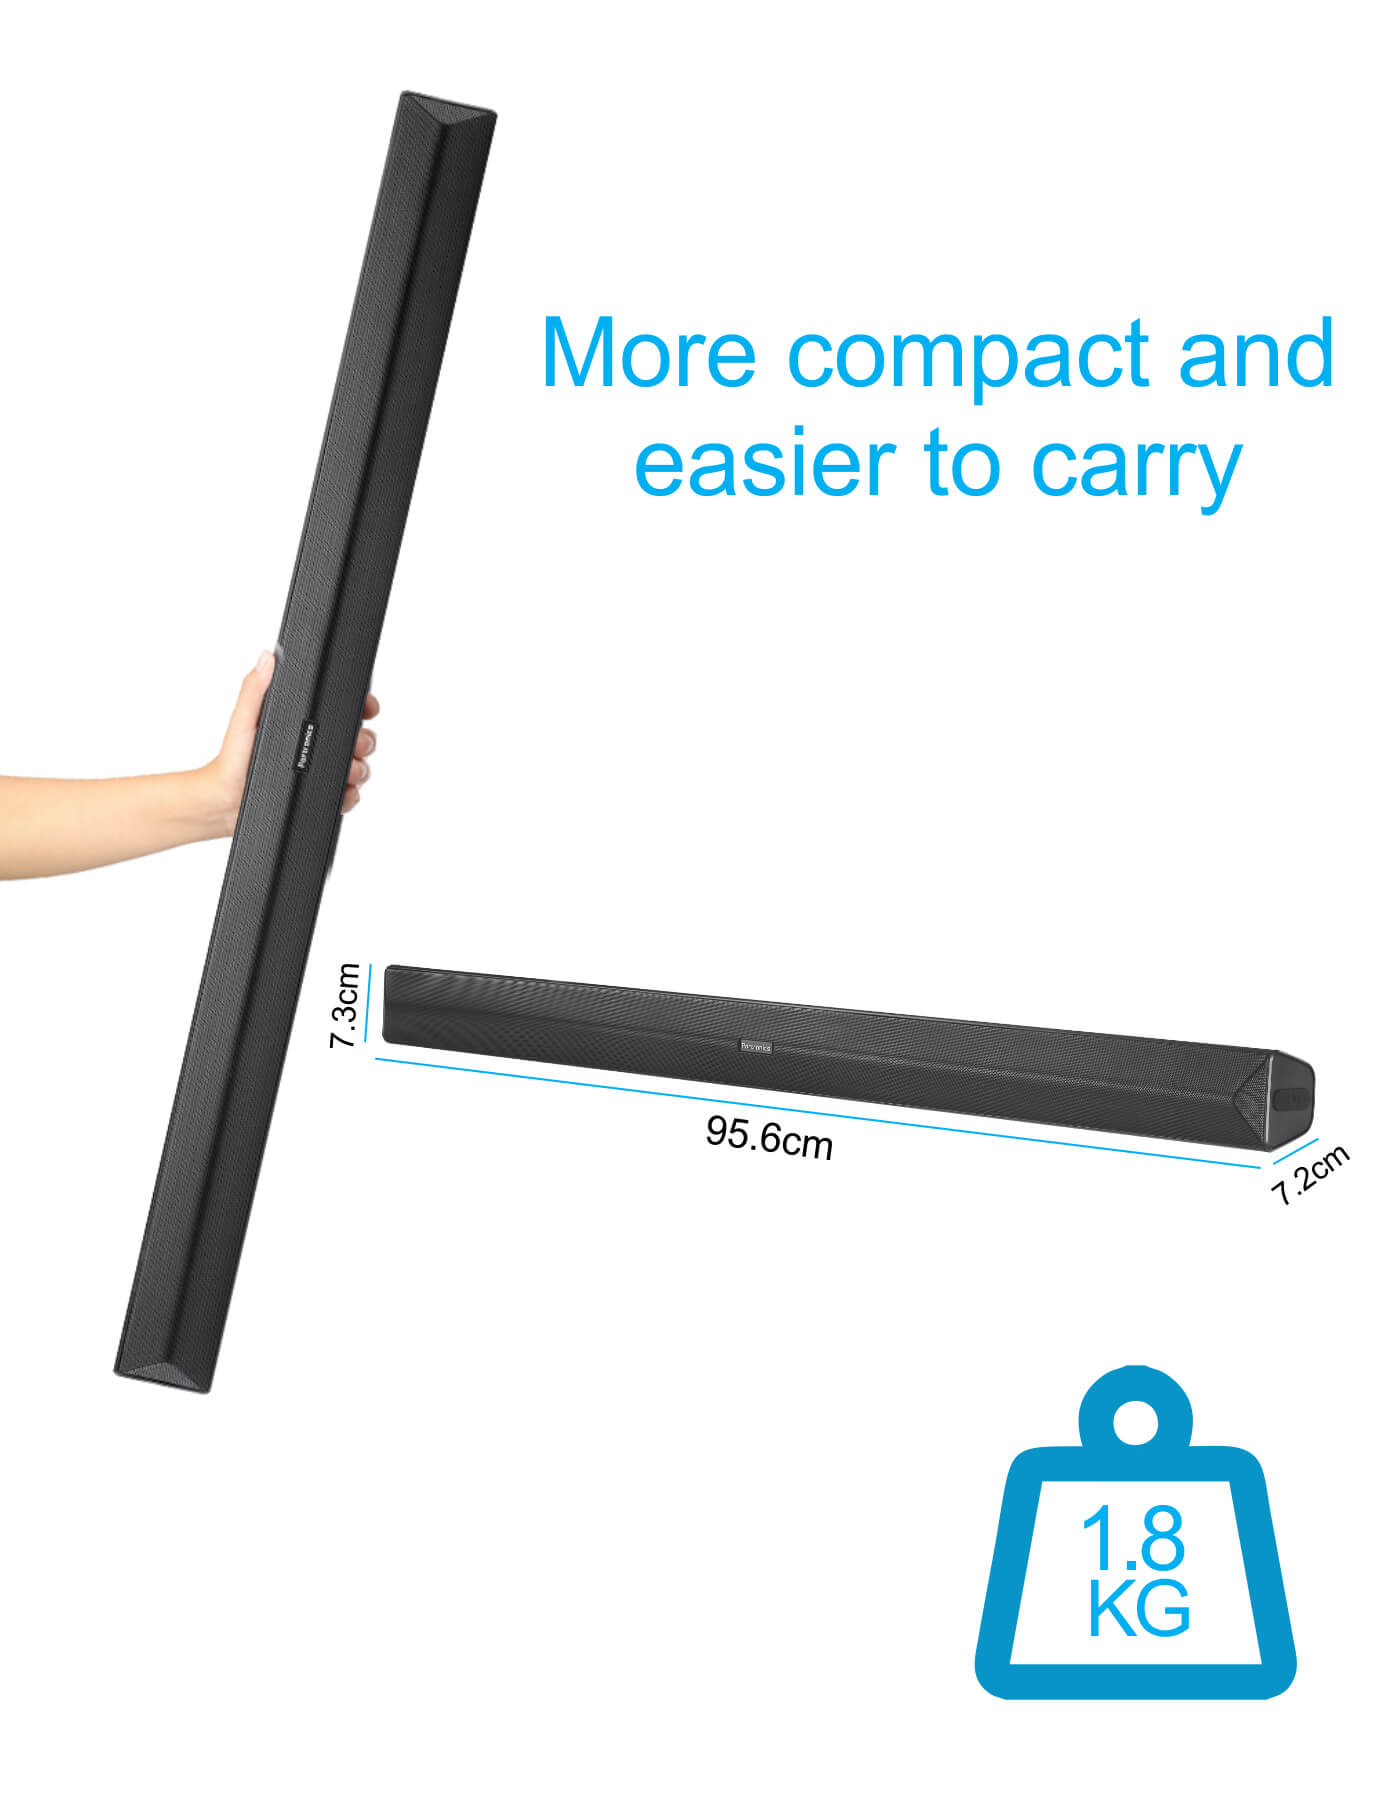 Portronics Sound Slick II: Wireless TV Sound Bar & Portable Sound Bar compact size easy to carry